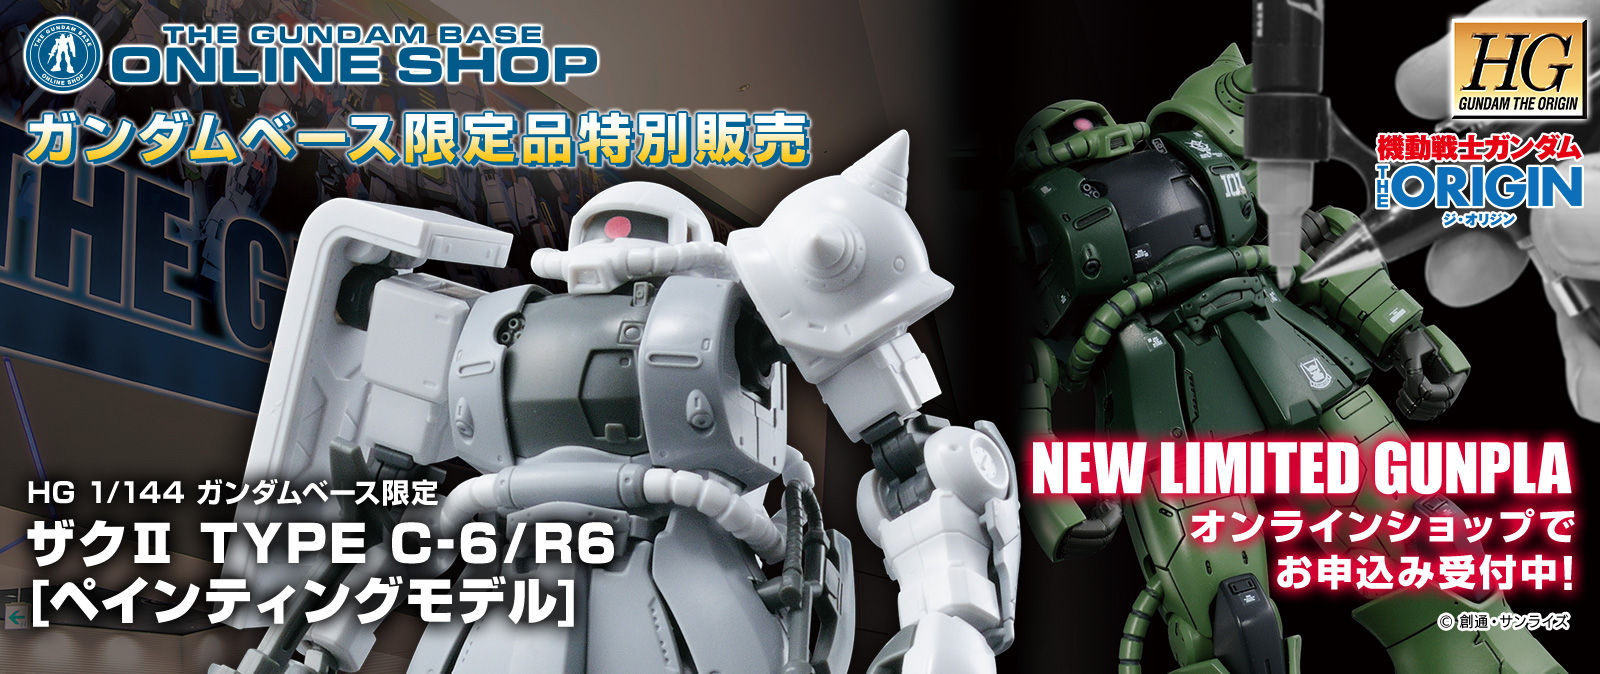 HGGTO 1/144 MS-06C-6/R6 Zaku II Type C-6/R6(Gundam The Origin Painting Model)